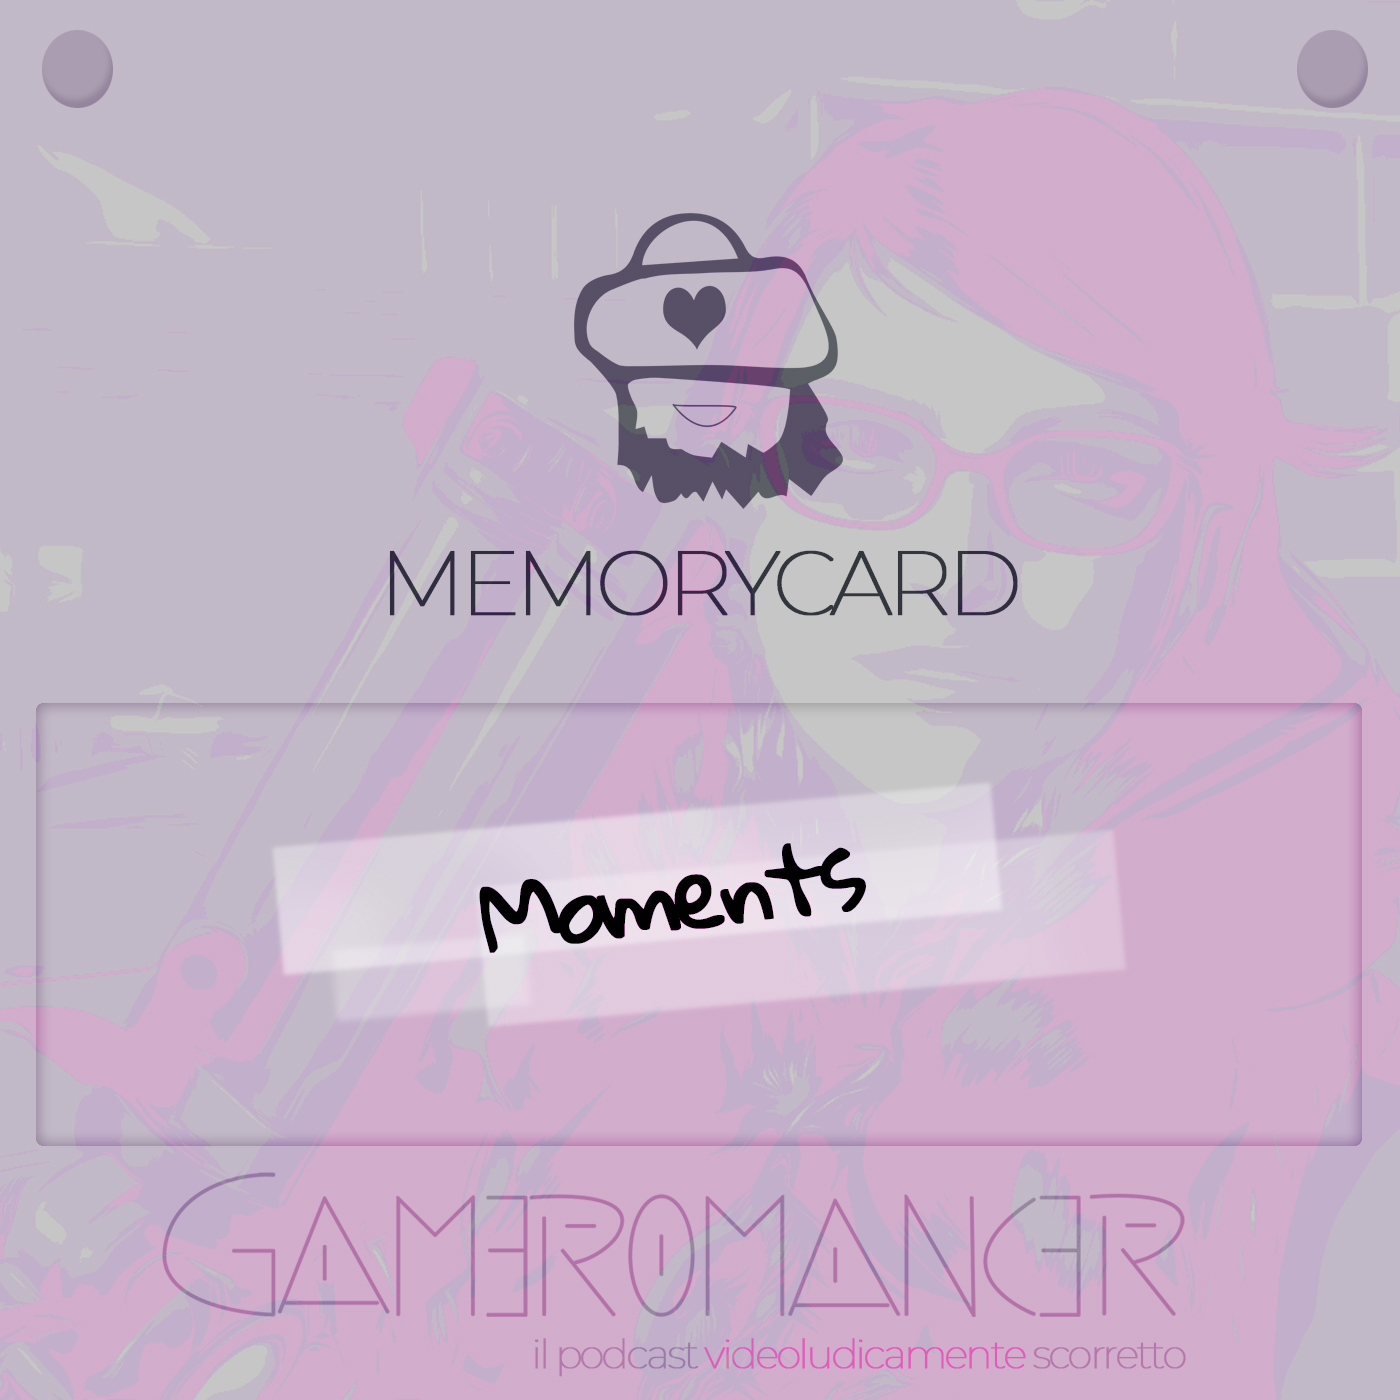 MemoryCard: Moments